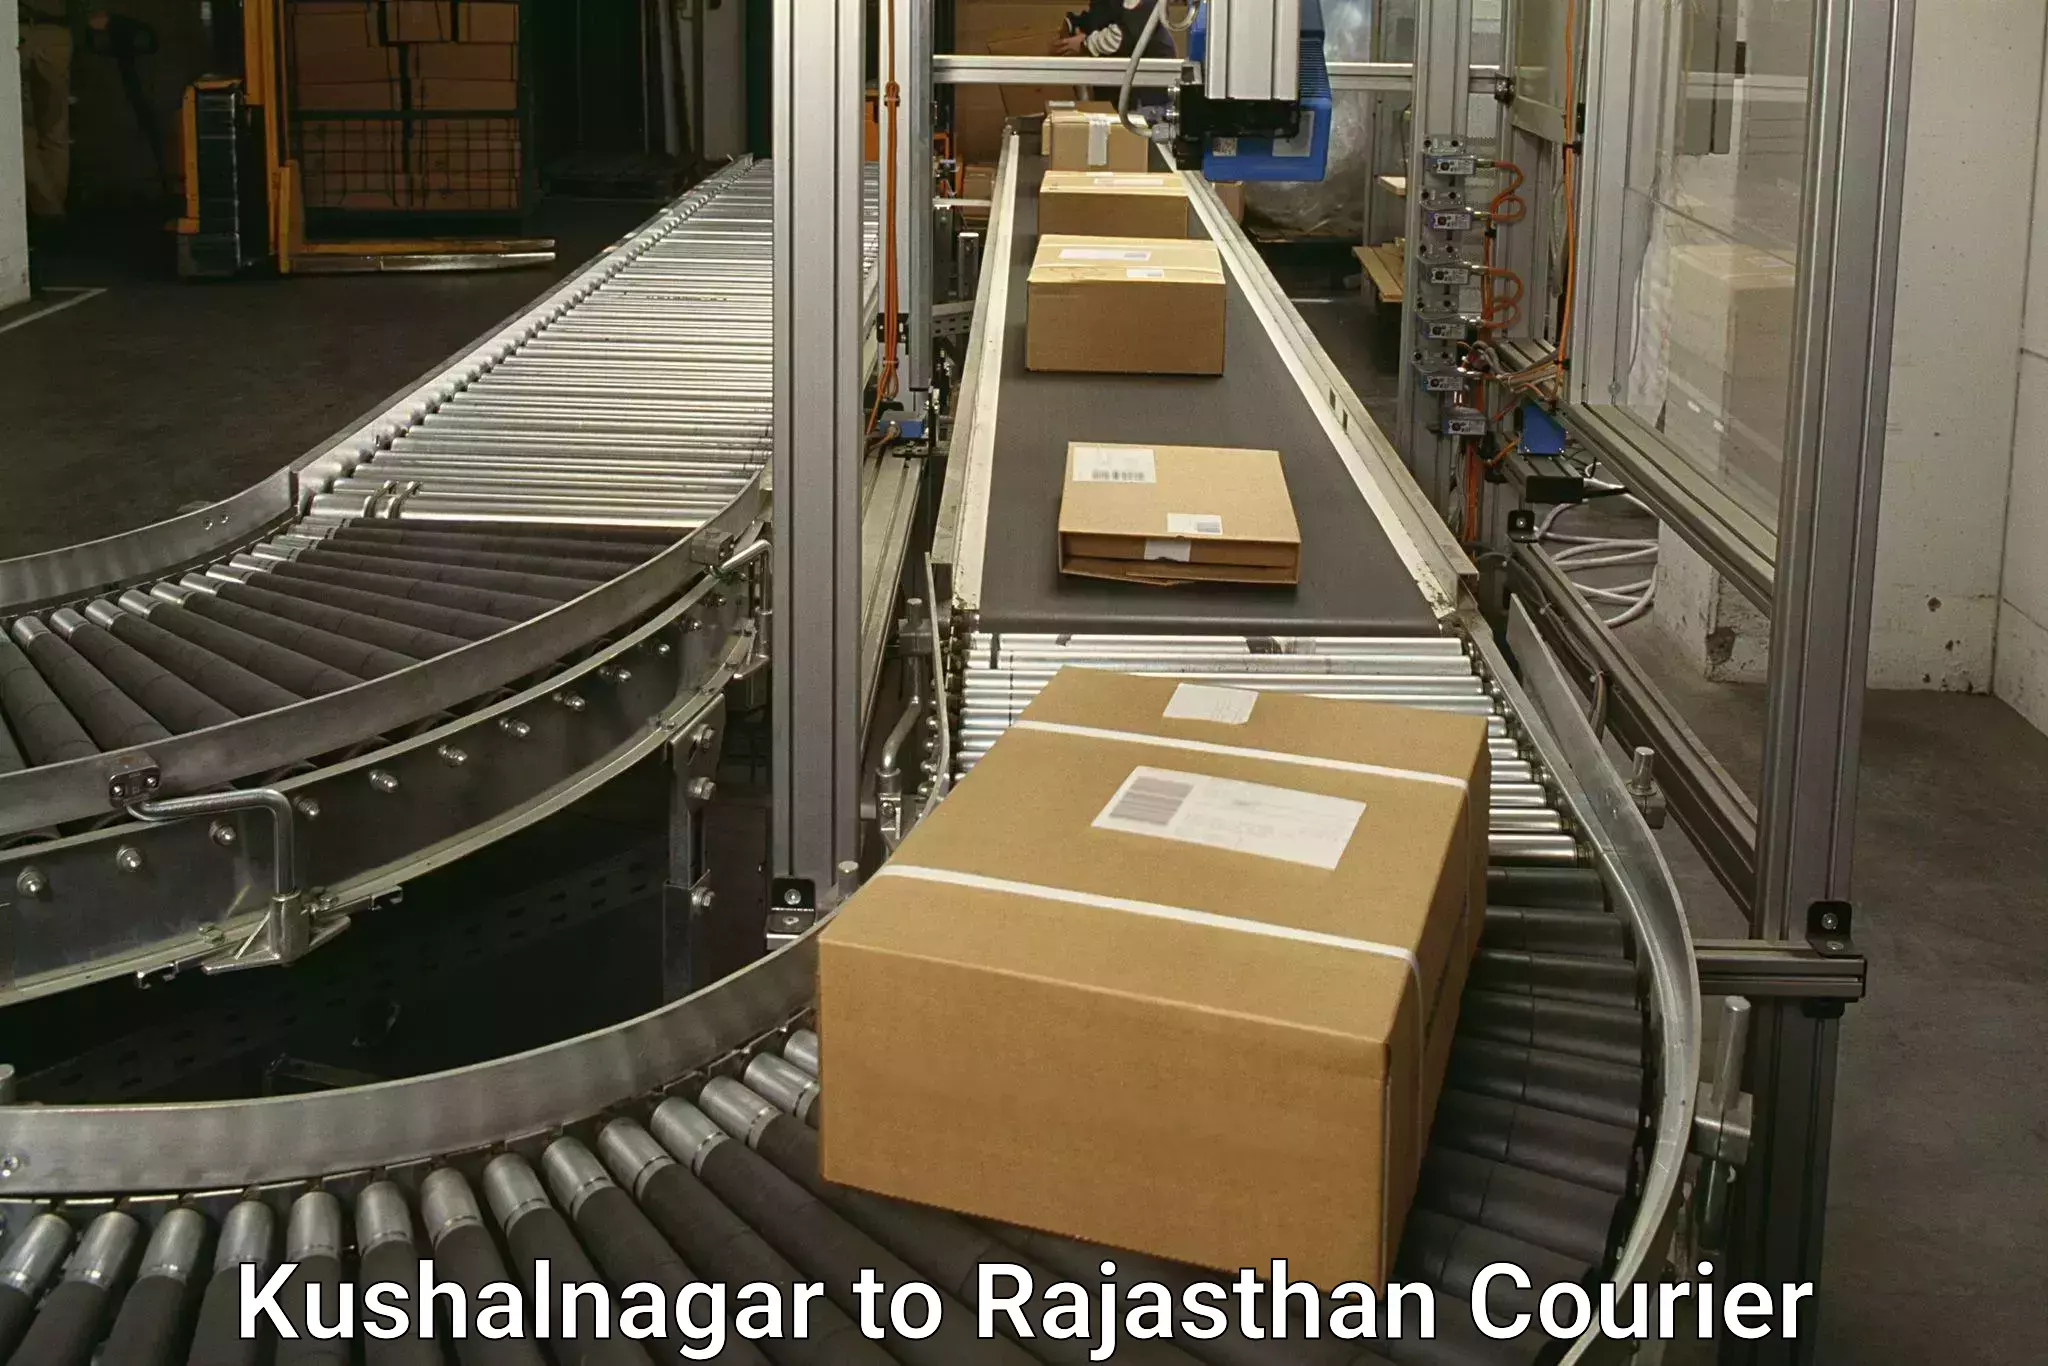 Courier service booking Kushalnagar to Khanpur